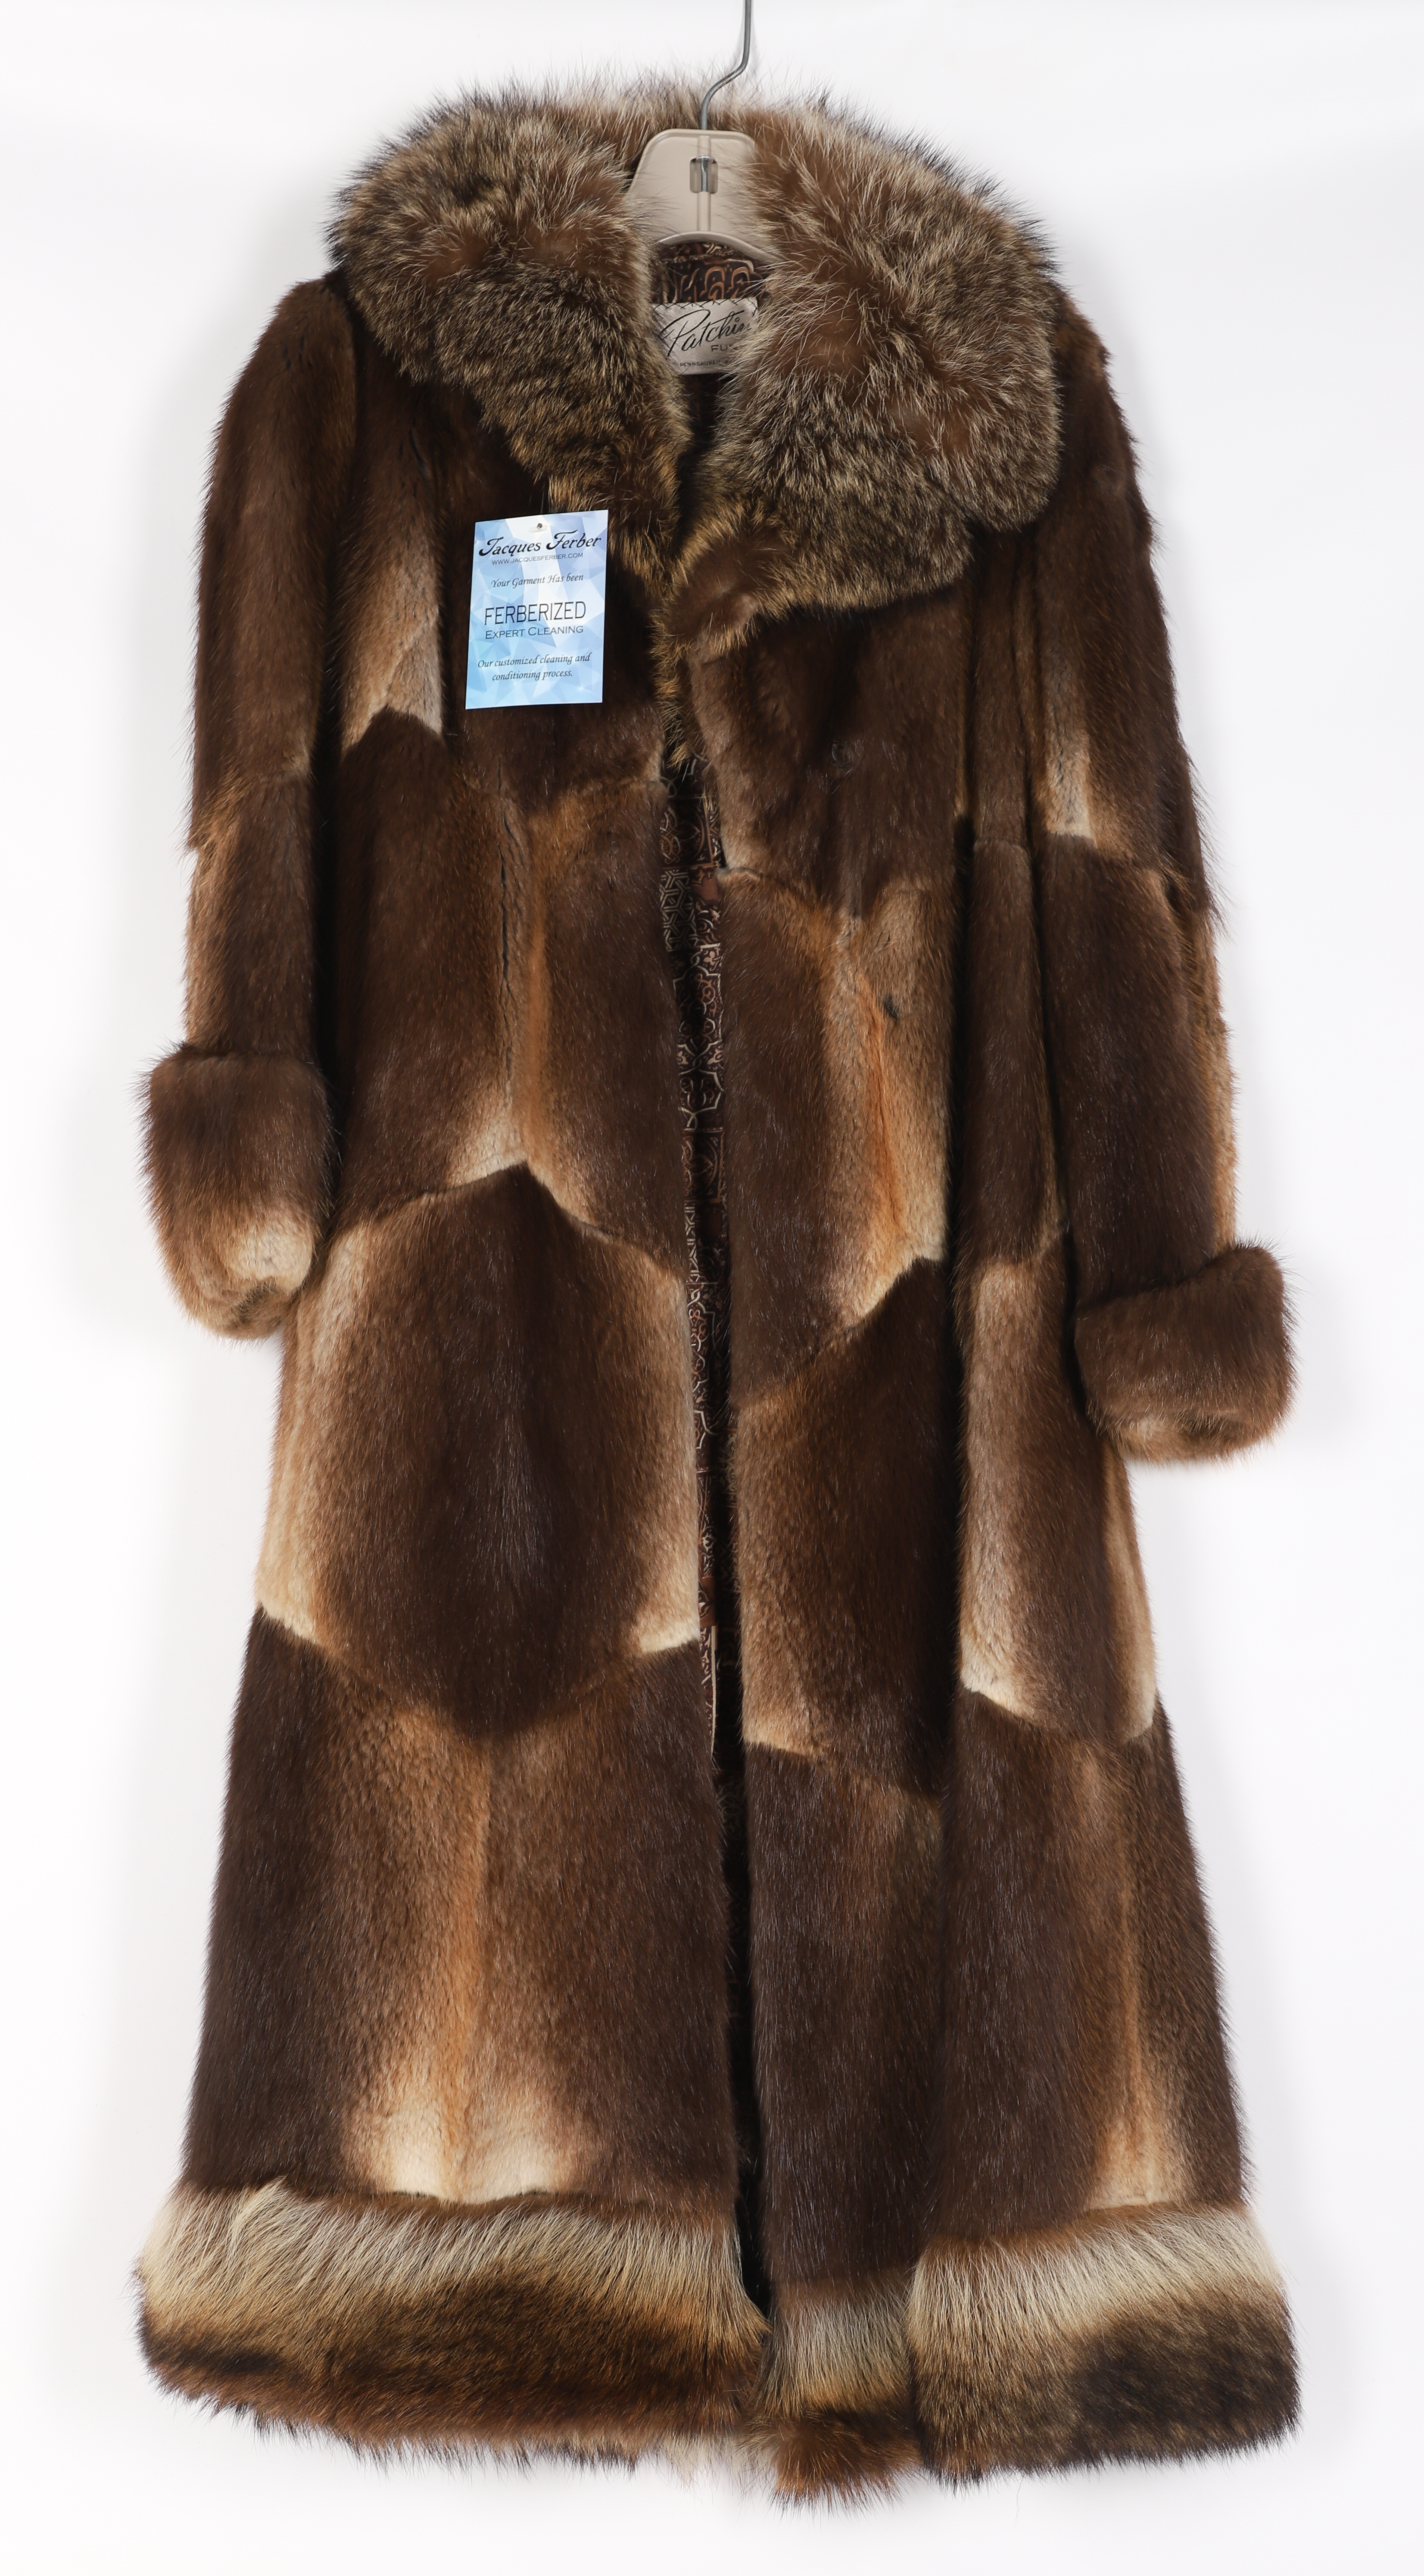 Patchin Furs full length fur coat, mink